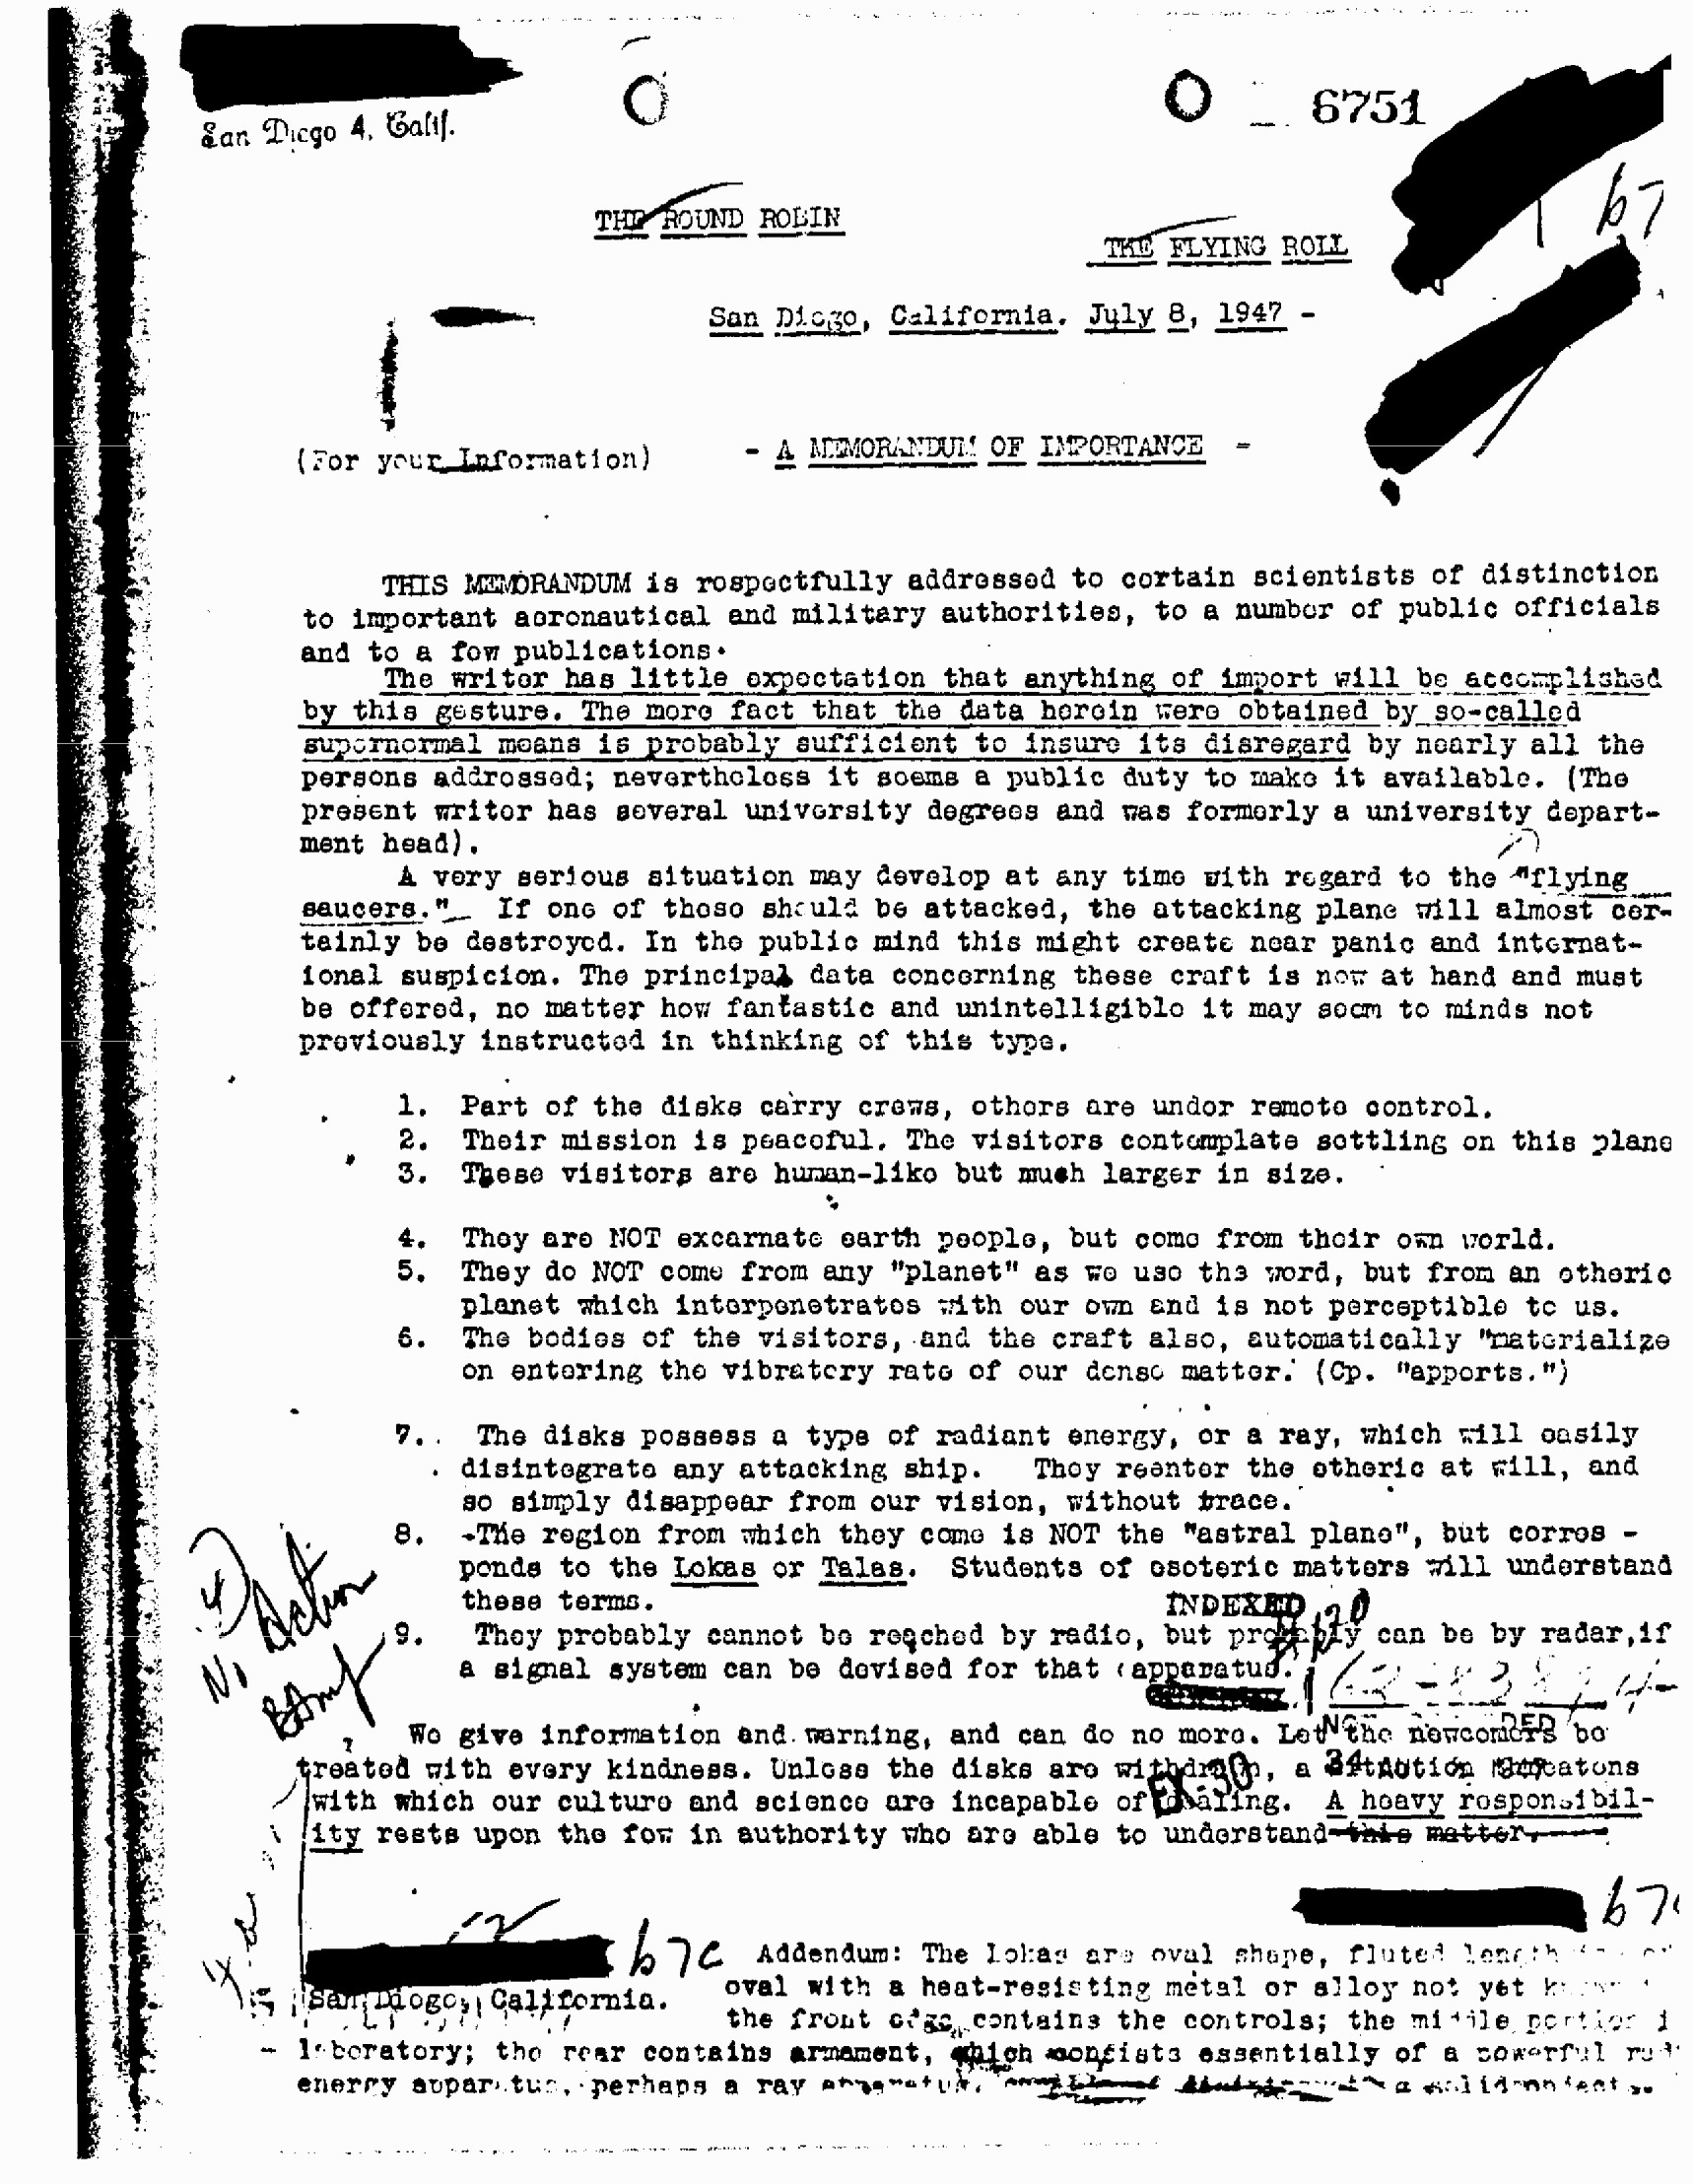 File Memorandum 6751 San Diego Cal July 8 1947 Aka A Memorandum Of Importance By Meade